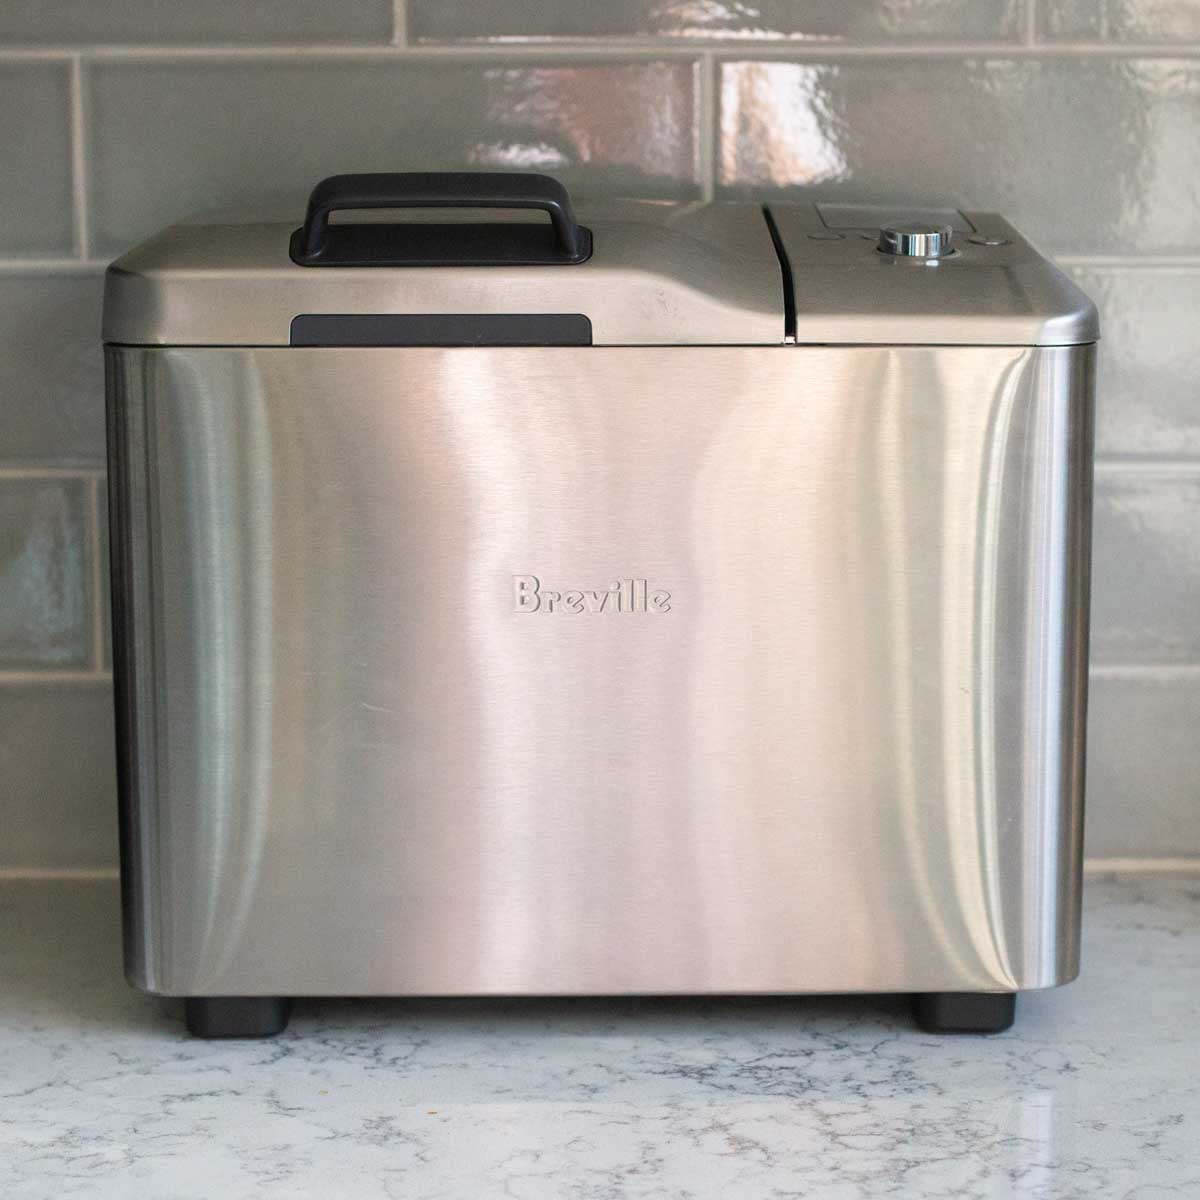 Breville Breville bread maker machine used Excellent Condition. 